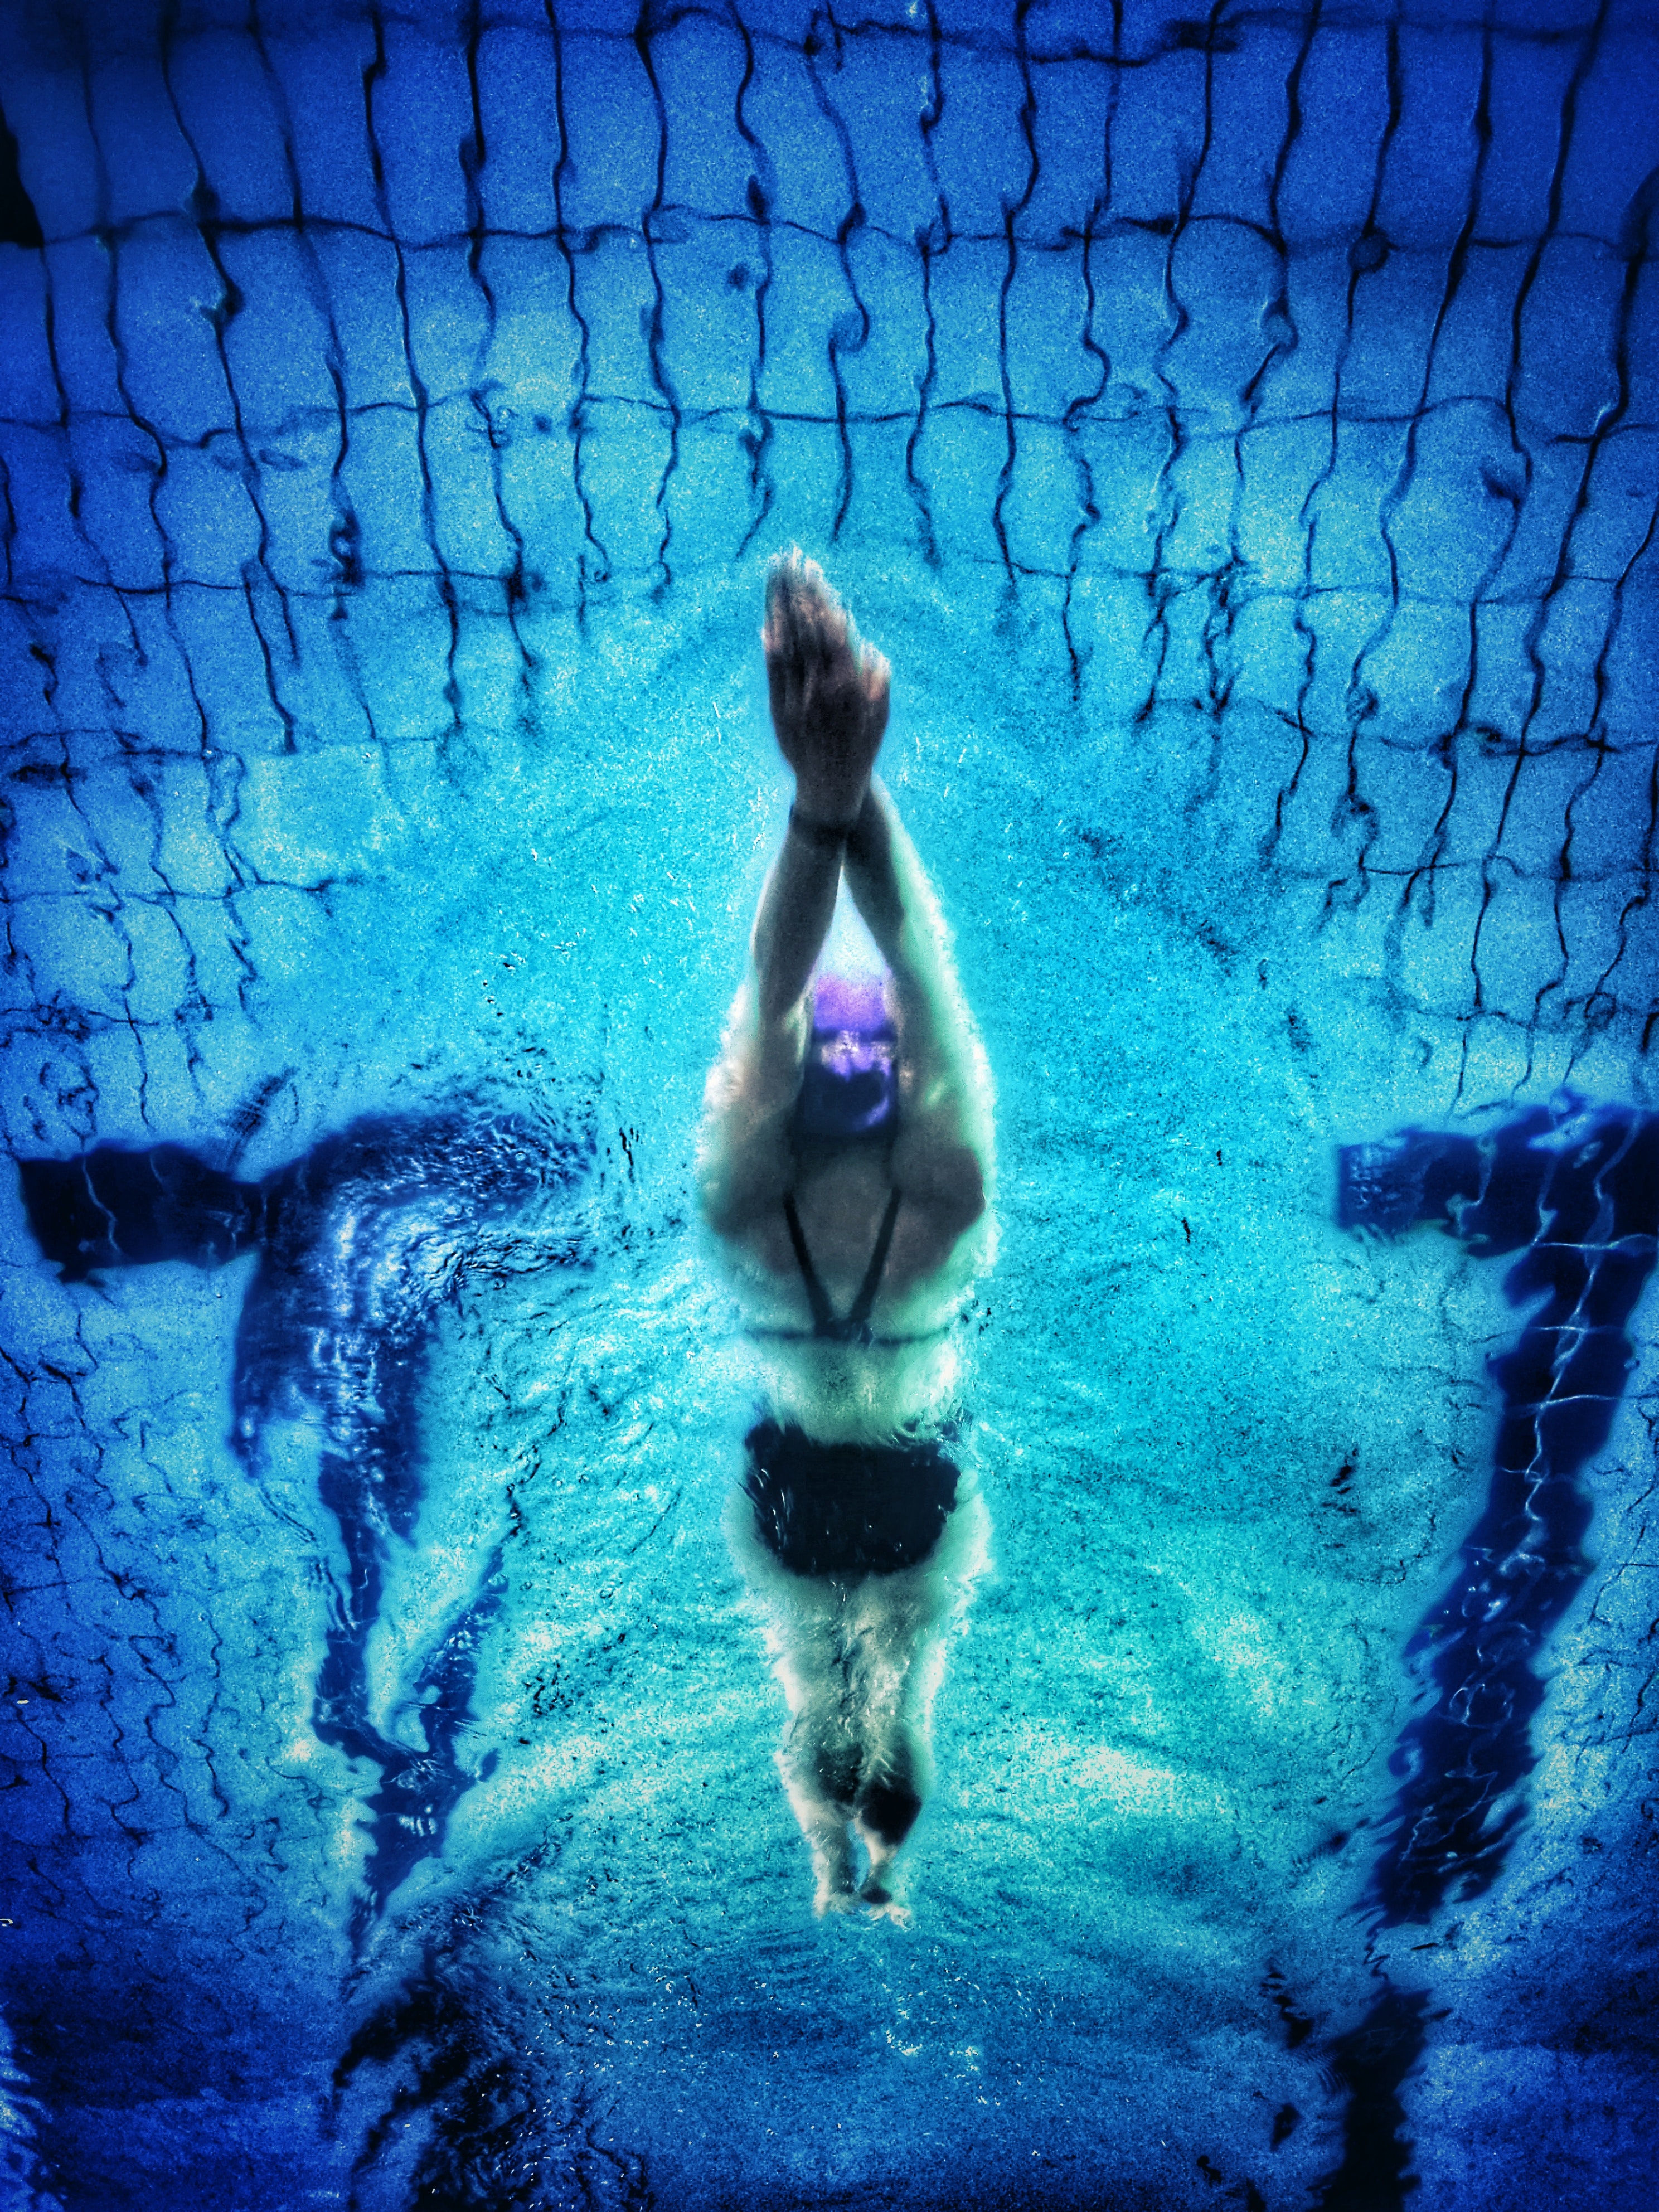 Easiest Sports Scholarships To Get - swim